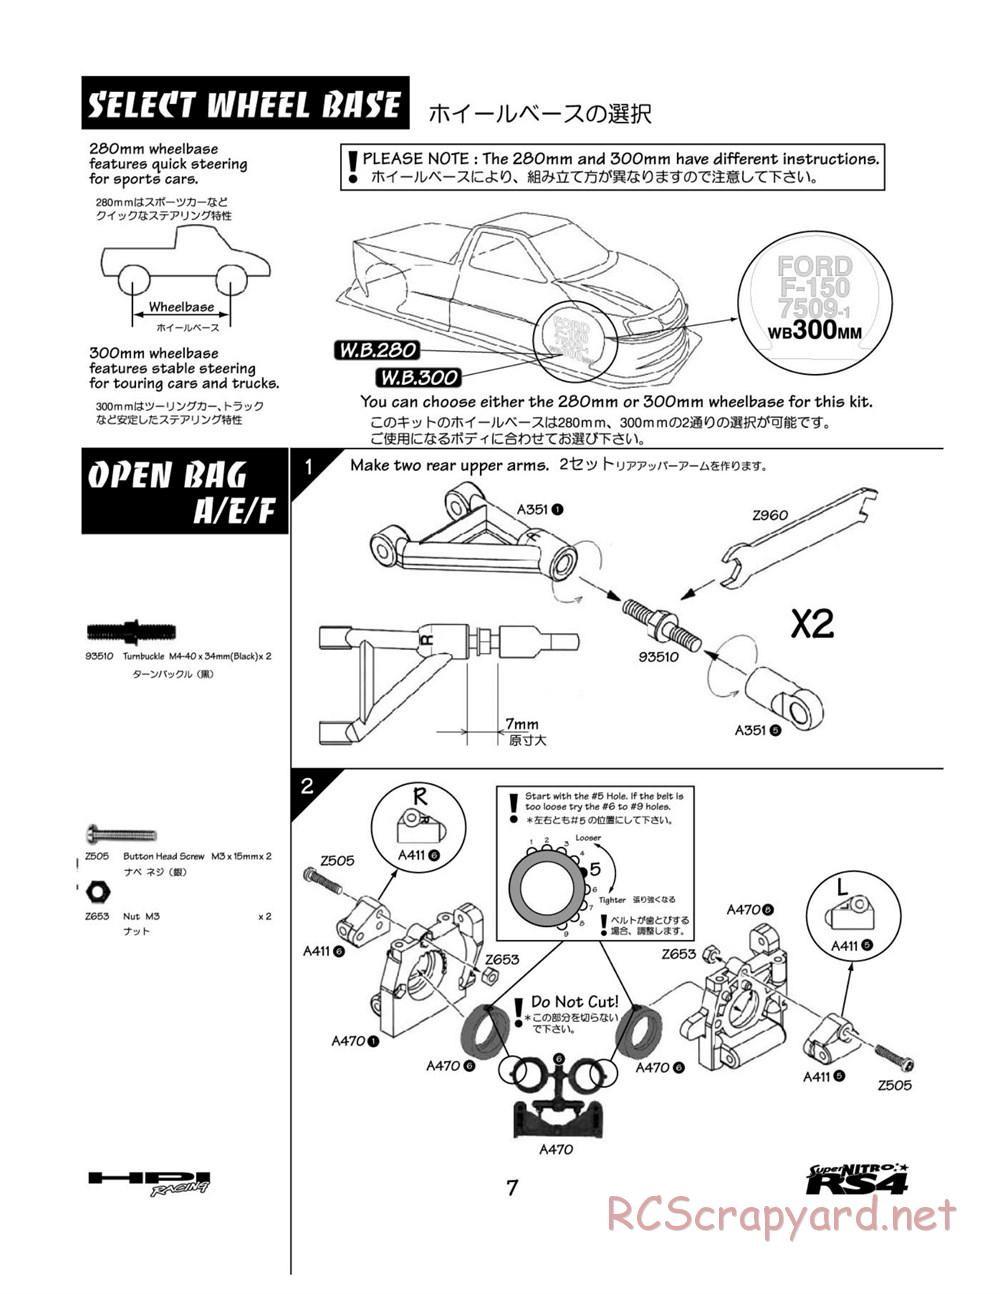 HPI - Super Nitro RS4 - Manual - Page 7